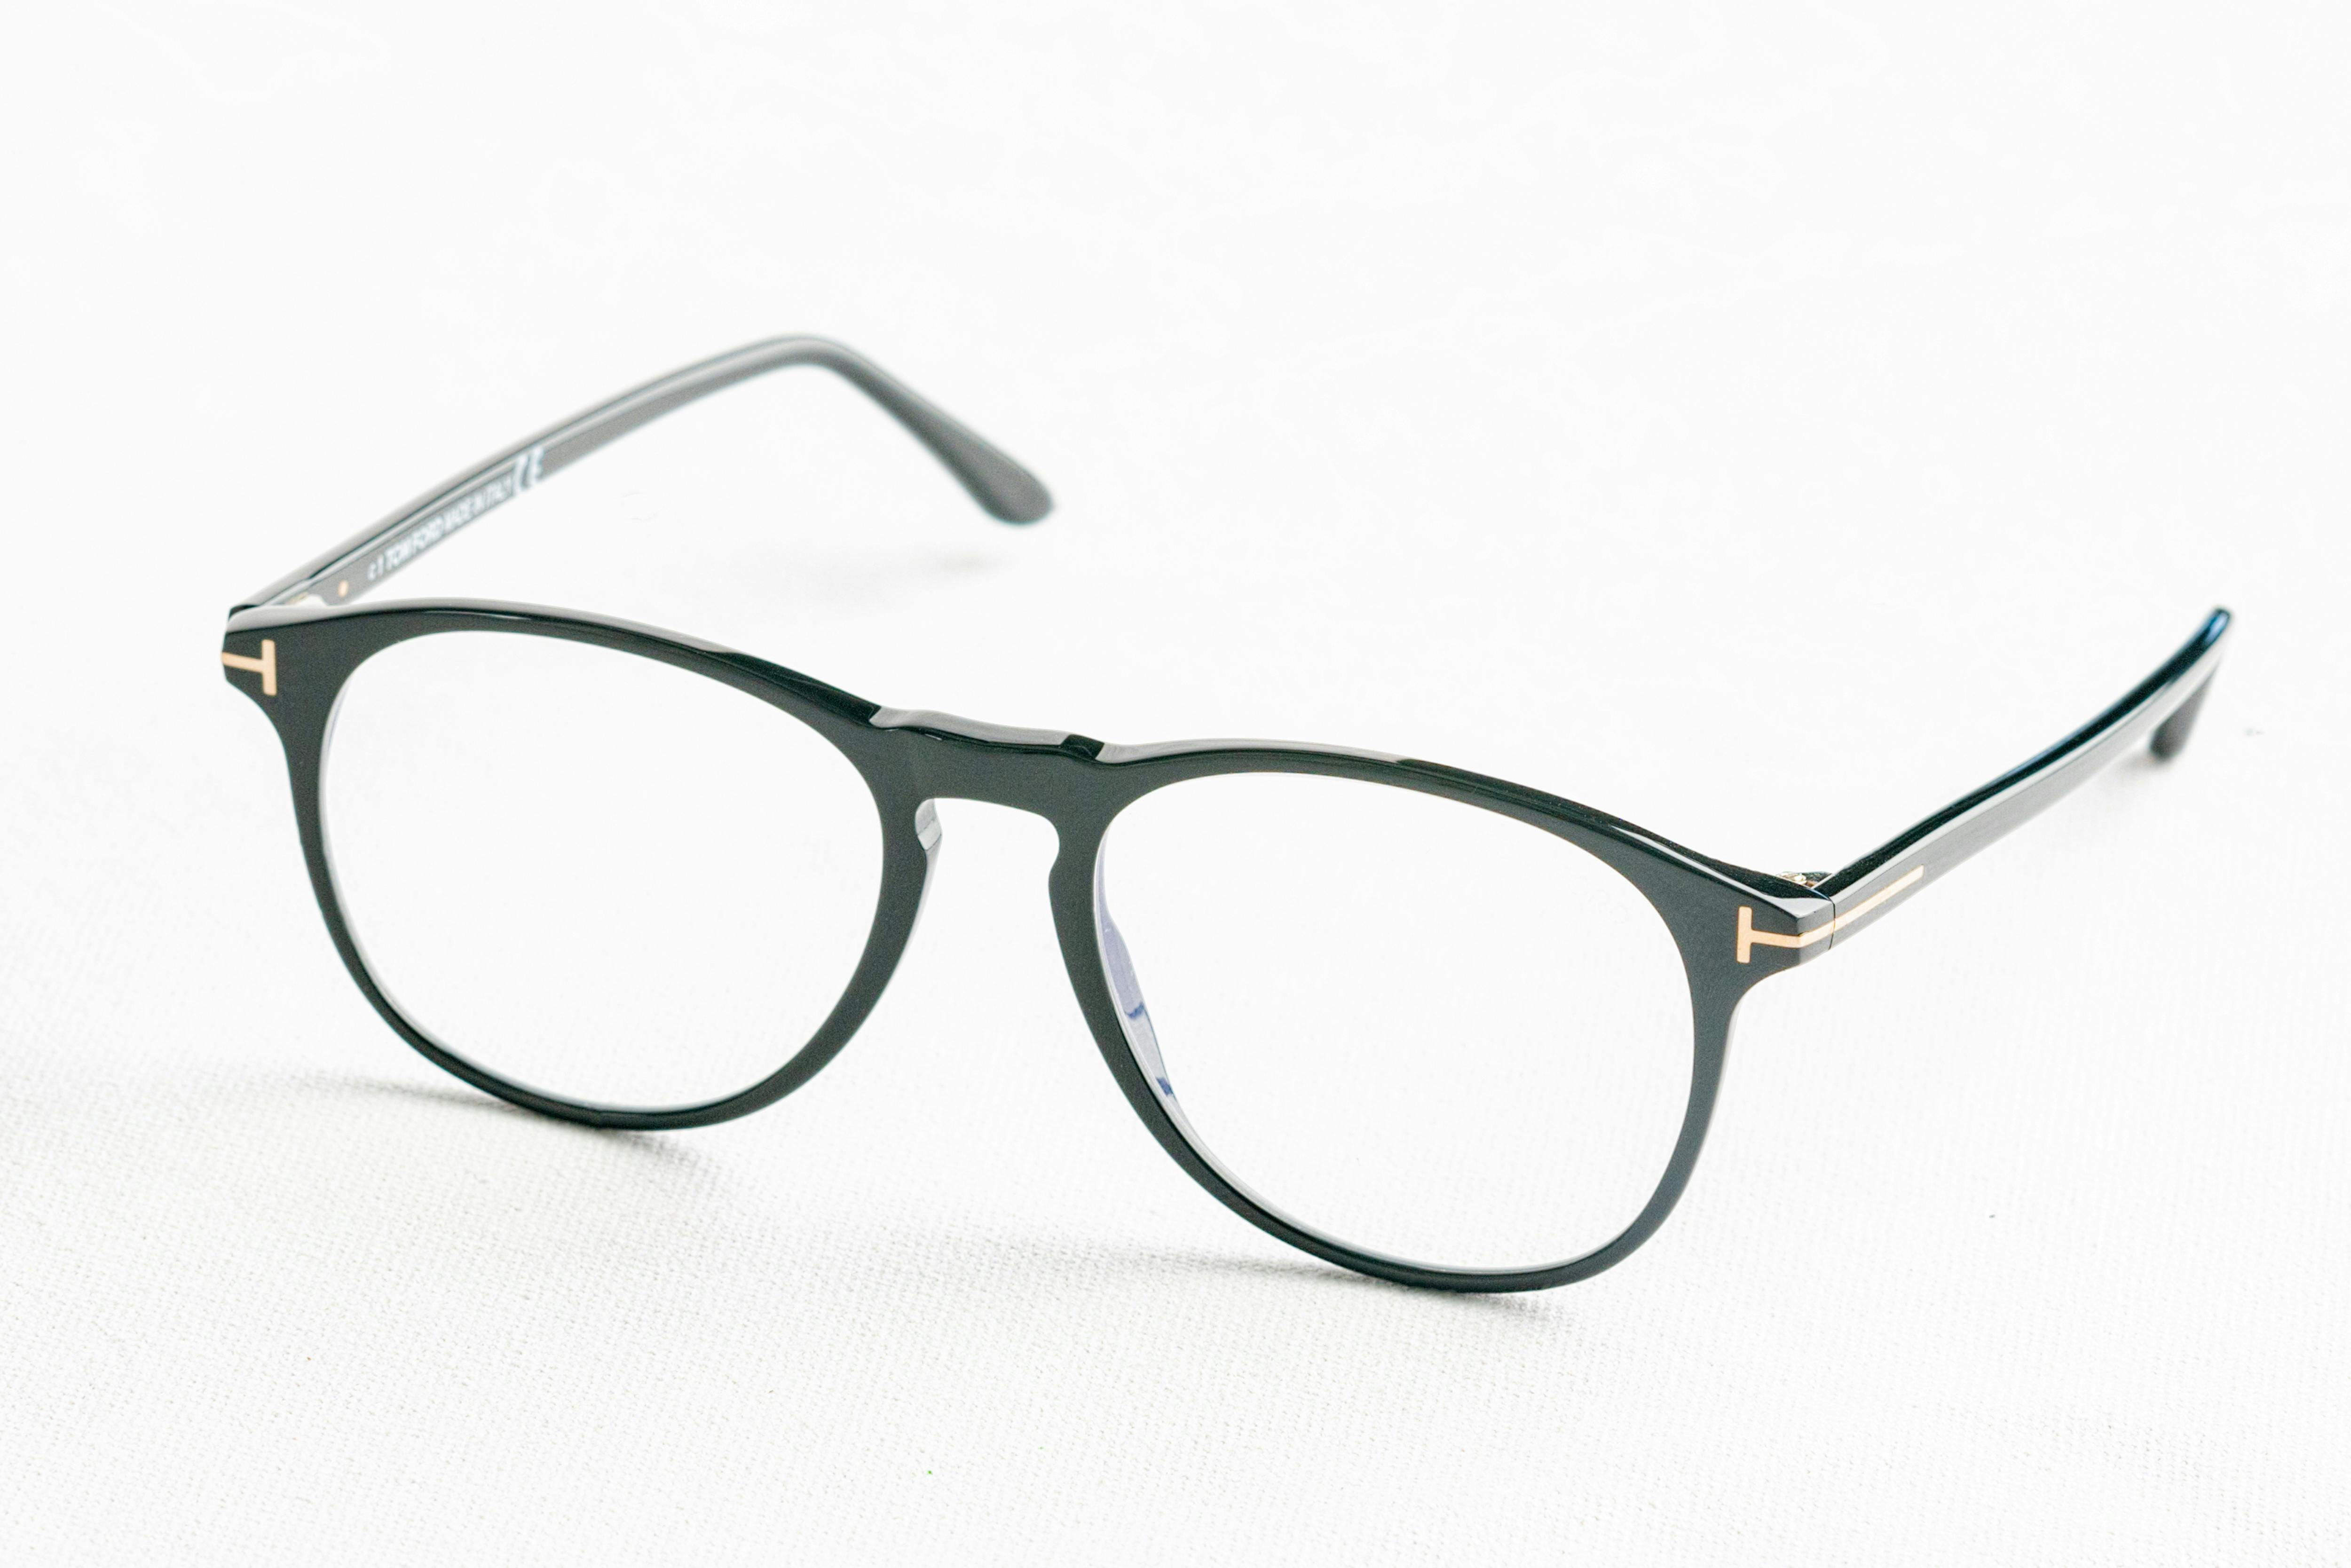 Brown-Framed Eyeglasses on a Calendar · Free Stock Photo